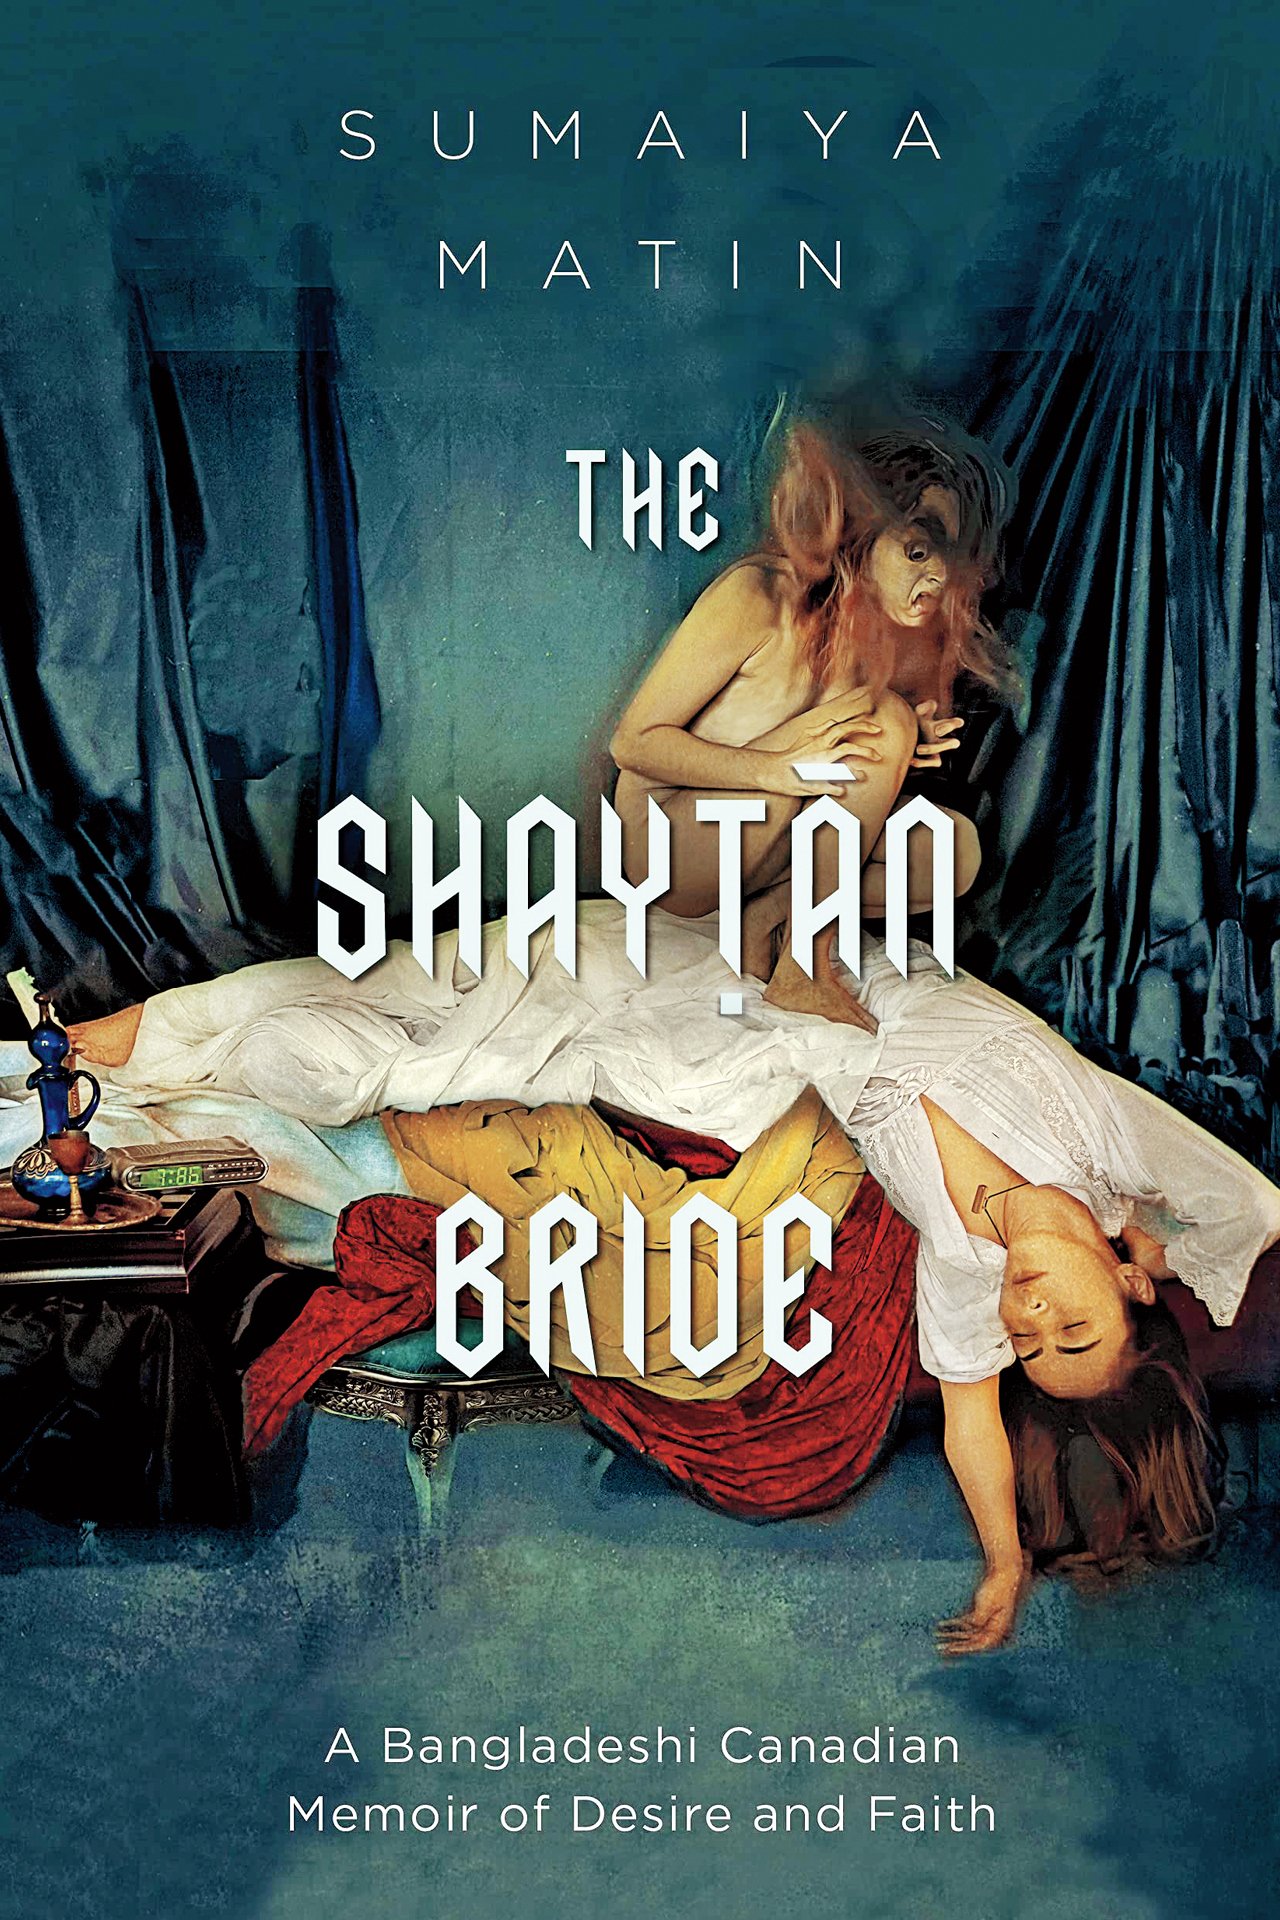 The shaytan bride by Sumaiya Matin